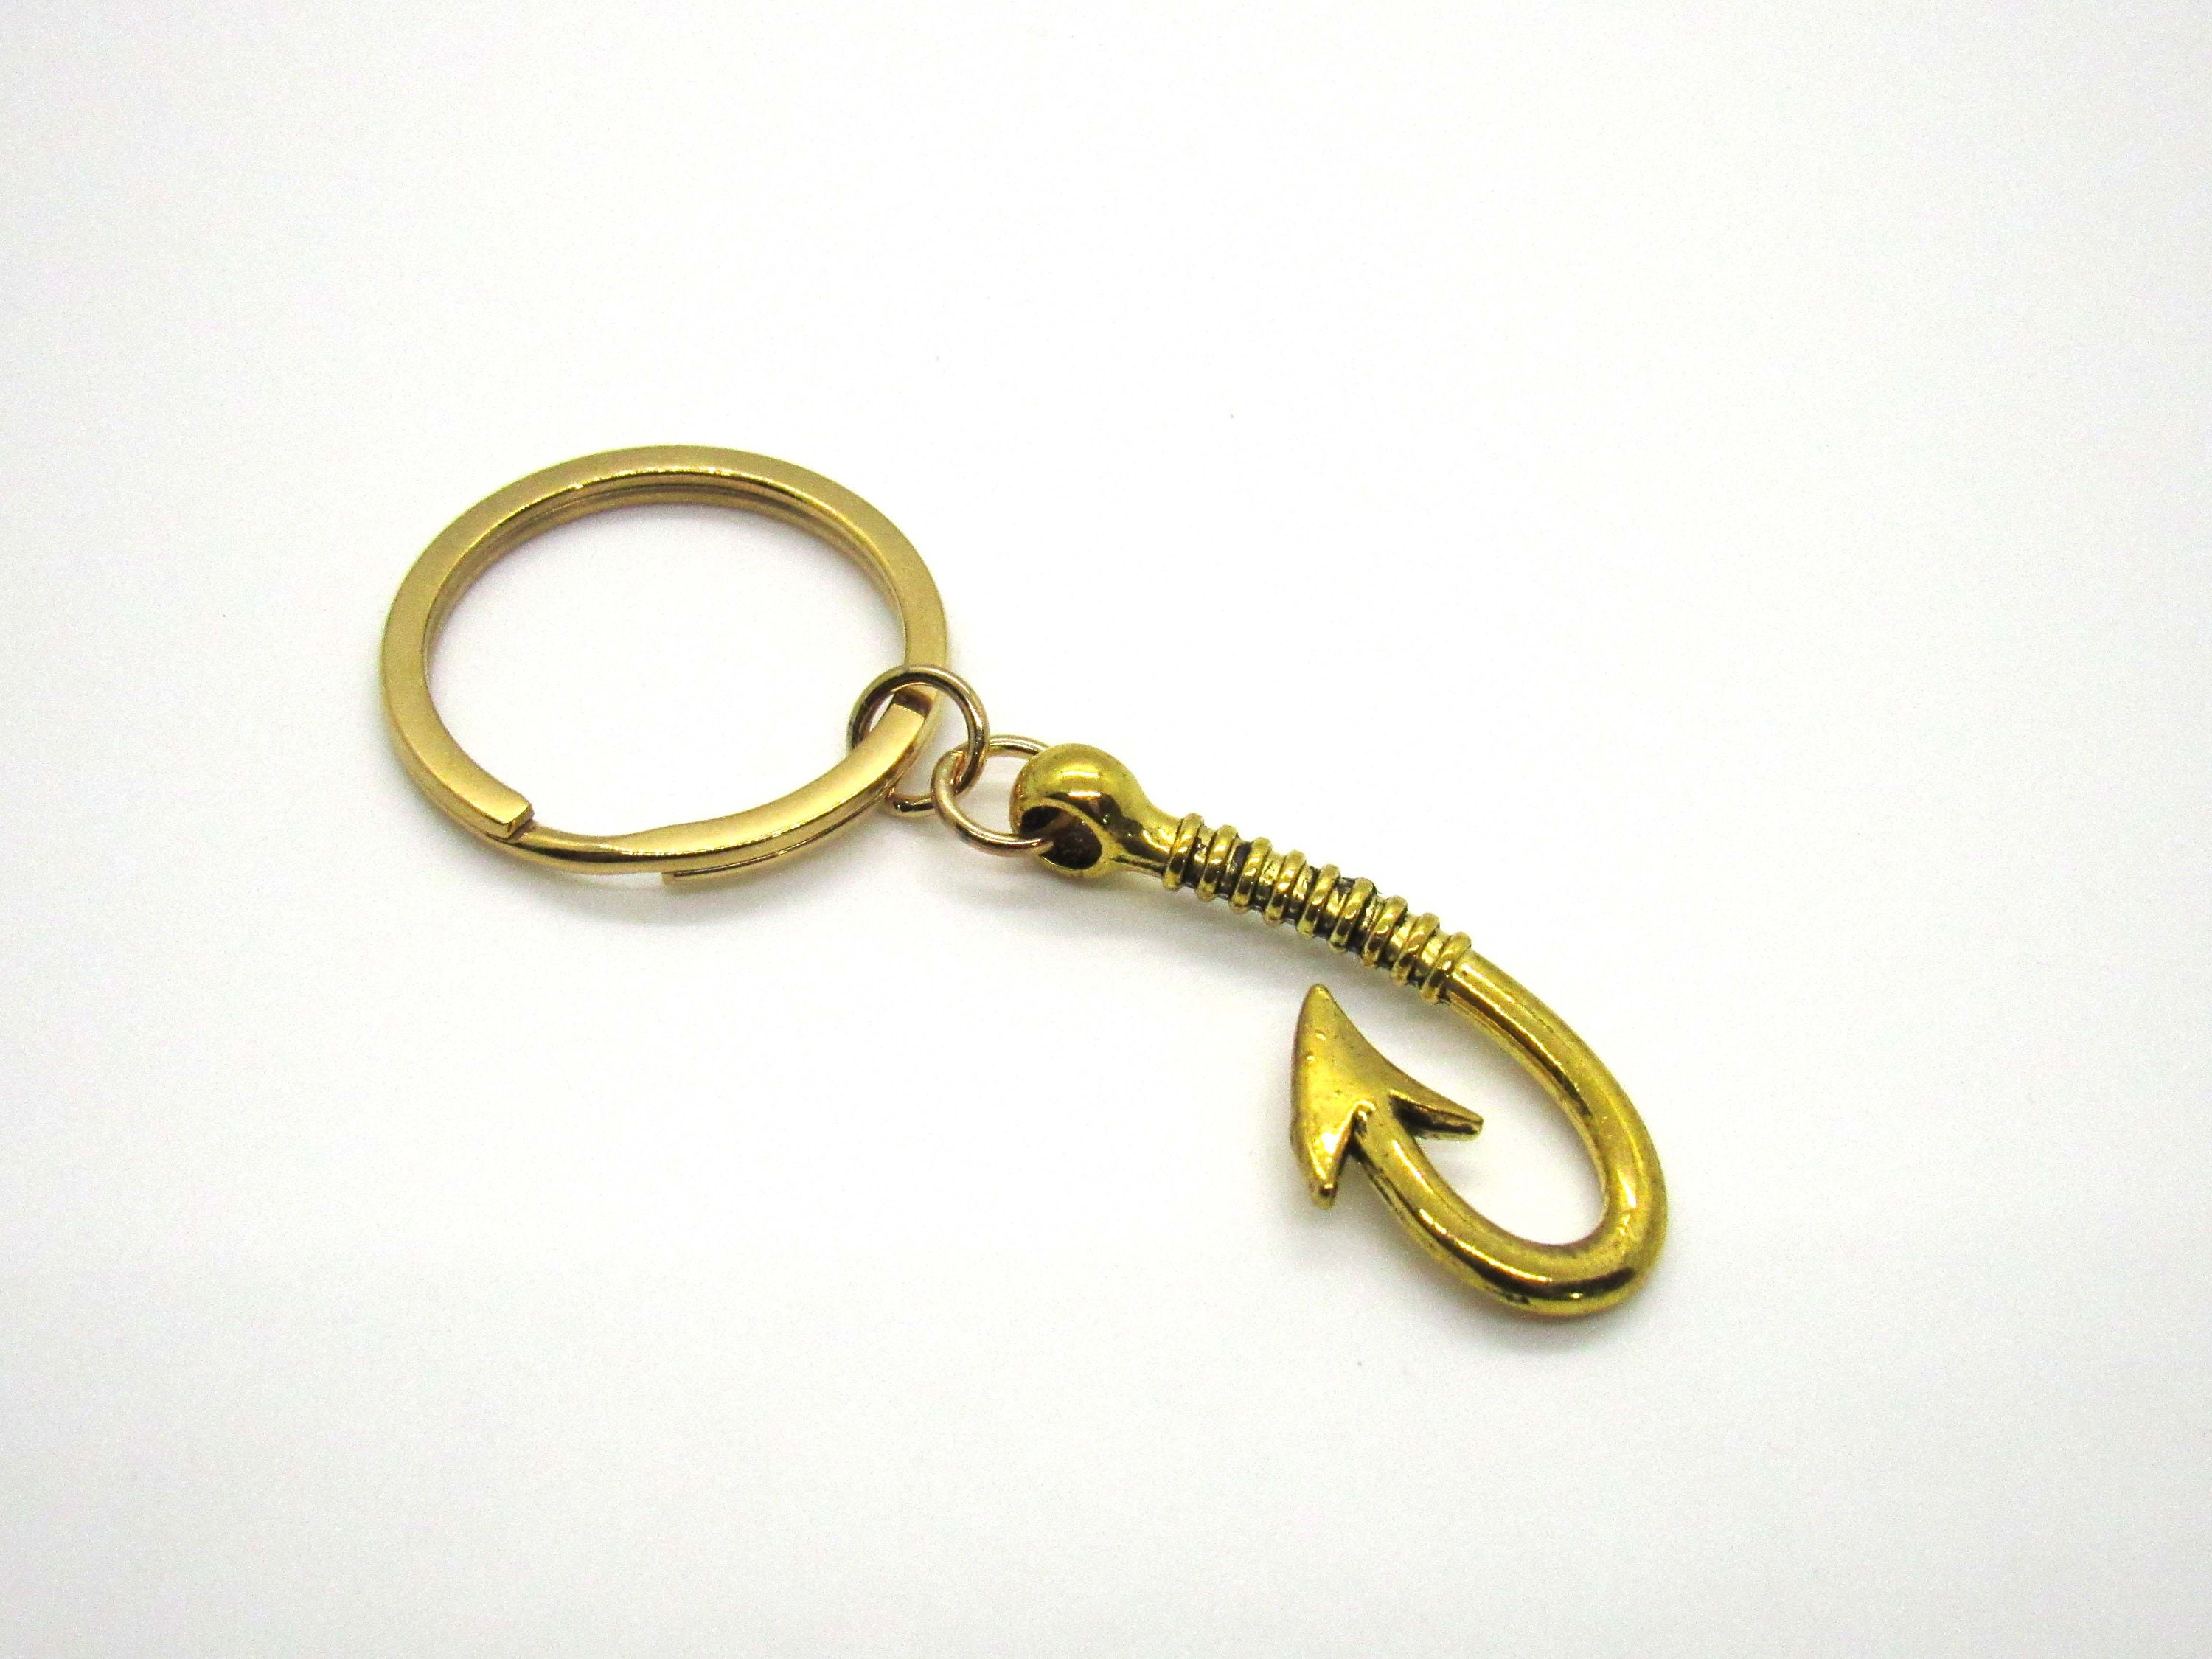 Antique Gold Tone Fish Hook Key Chain, Fish Hook Charm Key Ring